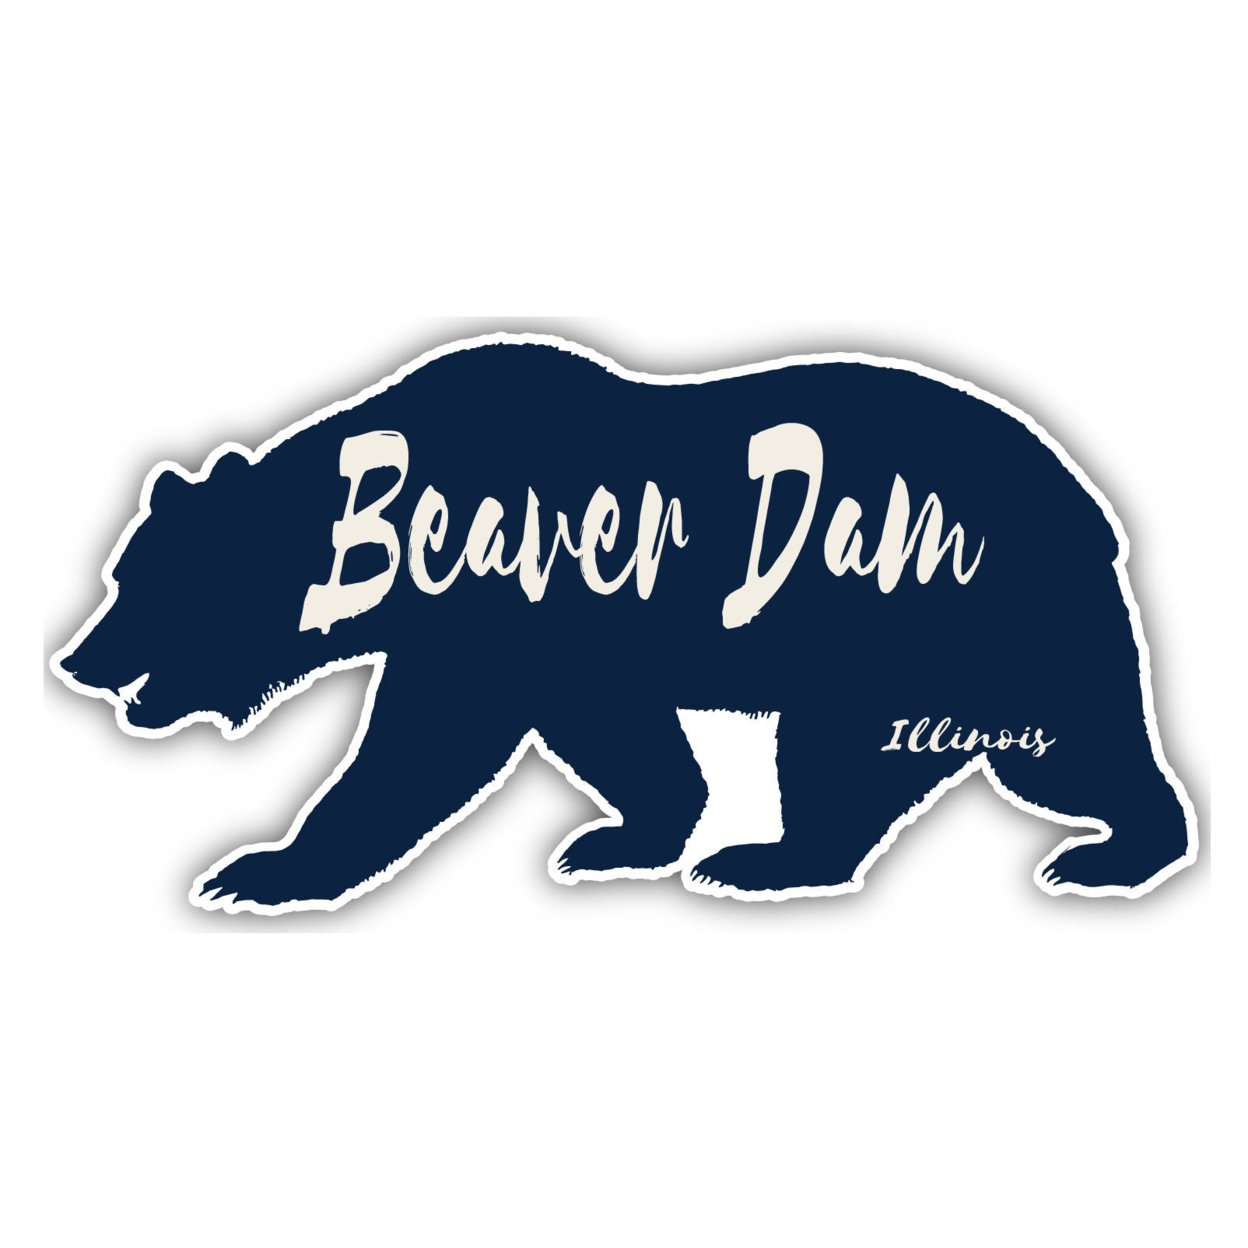 Beaver Dam Illinois Souvenir Decorative Stickers (Choose Theme And Size) - Single Unit, 2-Inch, Bear